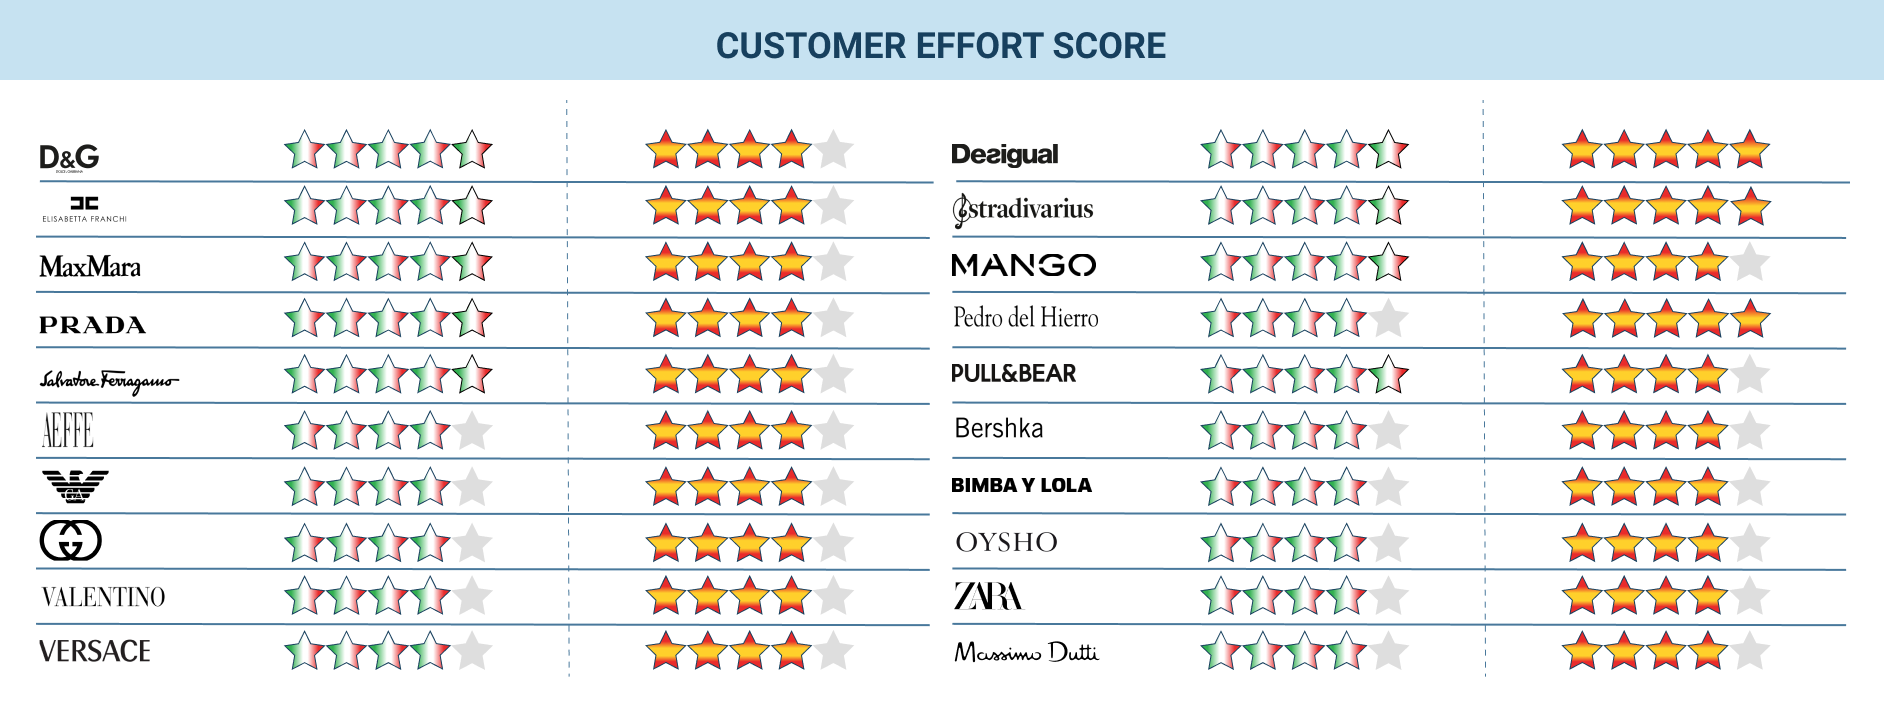 Customer Effort Score results